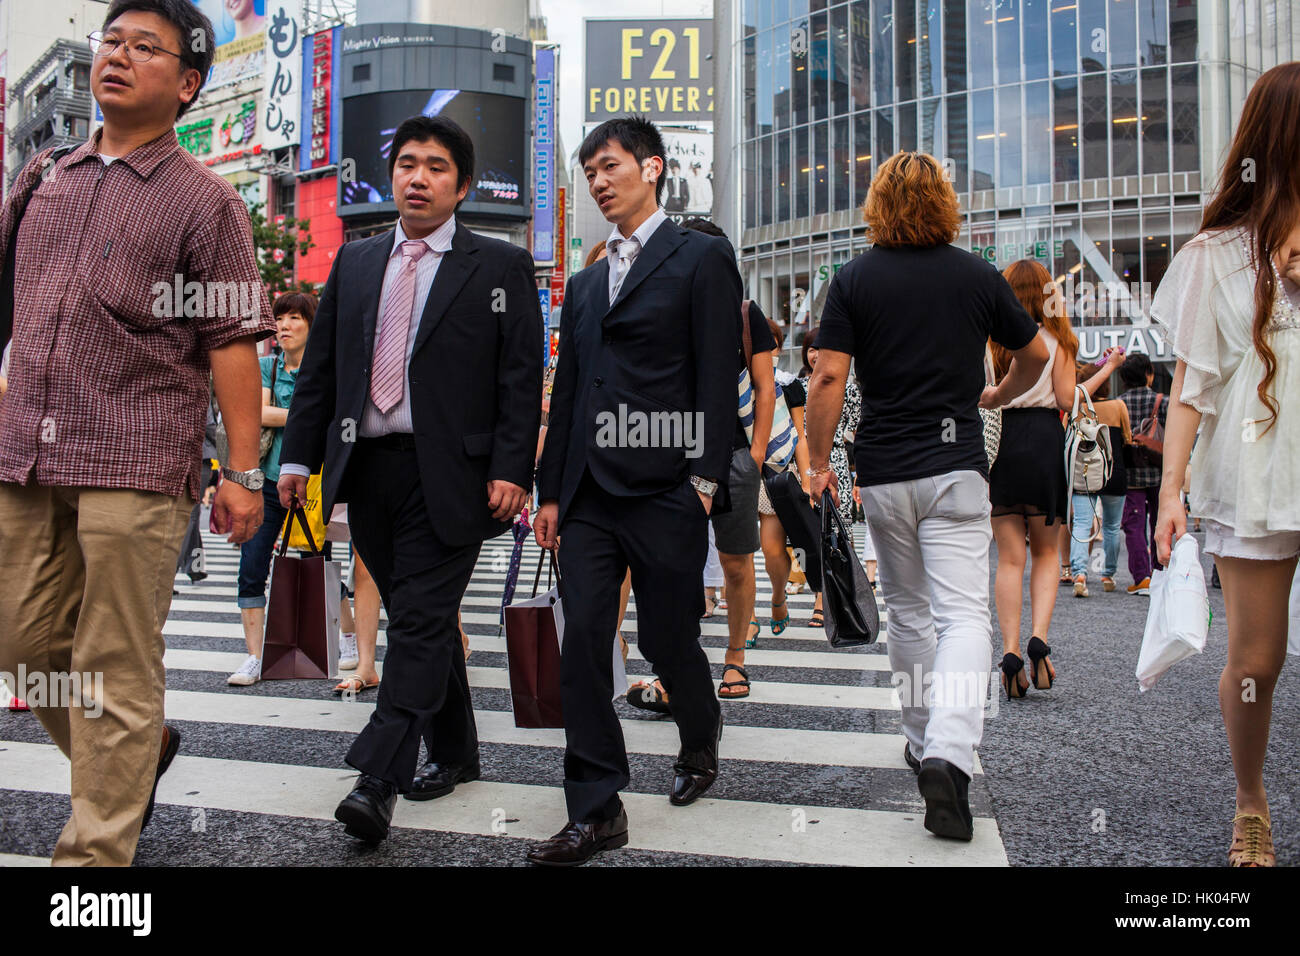 Unternehmer, salarymen, Männer, Rush Hour, Shibuya crosswalk Hachiko Square,. Tokyo City, Japan, Asien Stockfoto